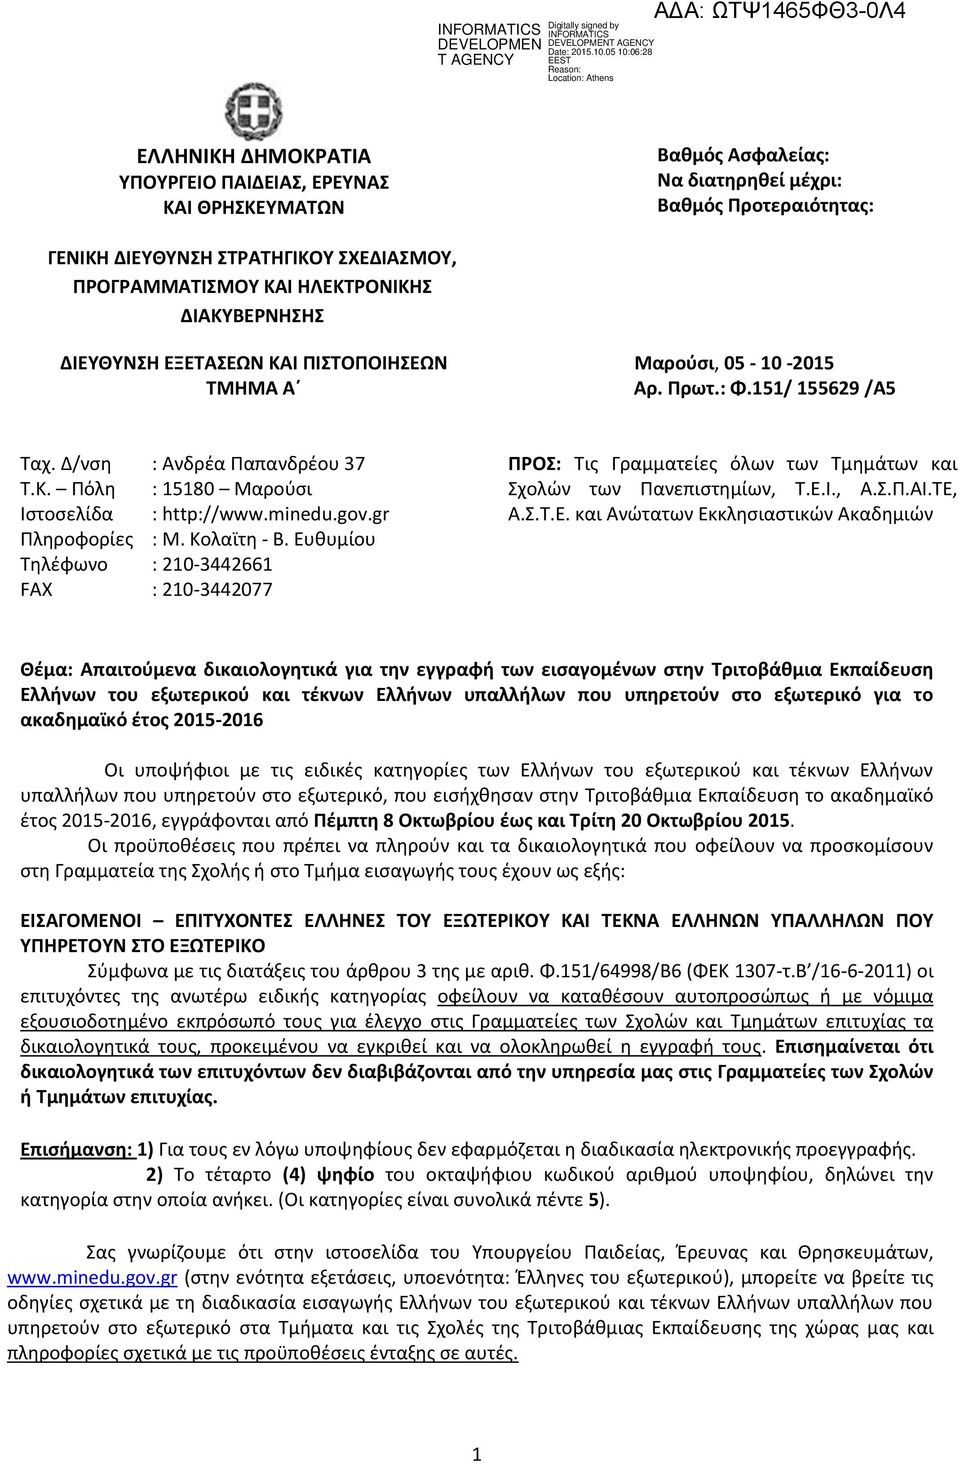 minedu.gov.gr Πληροφορίες : Μ. Κολαϊτη - Β. Ευ